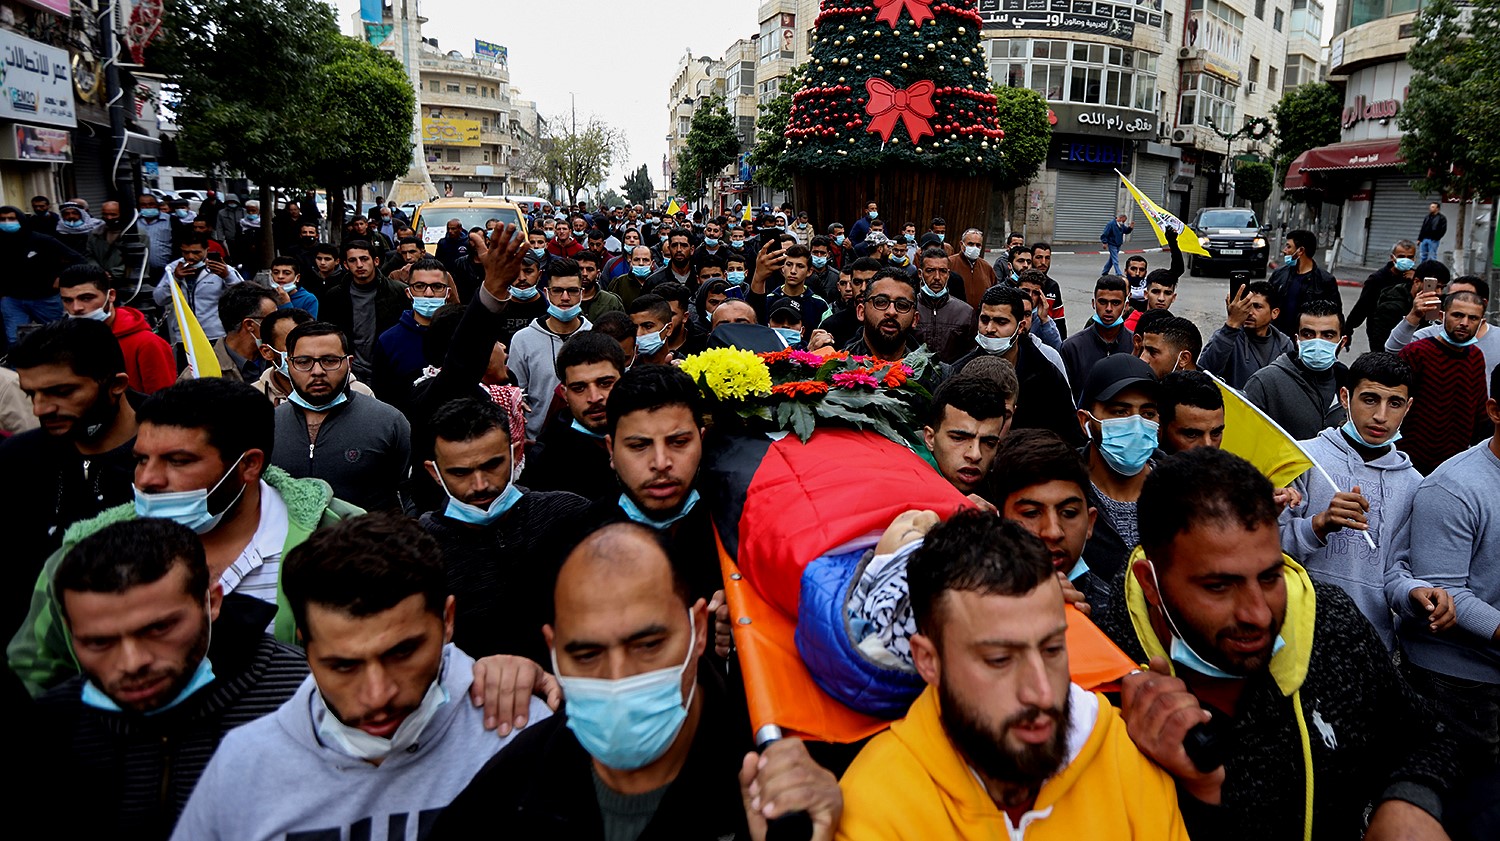 The funeral of Ali Abu Alia in the city of Ramallah, Saturday morning, December 5, 2020